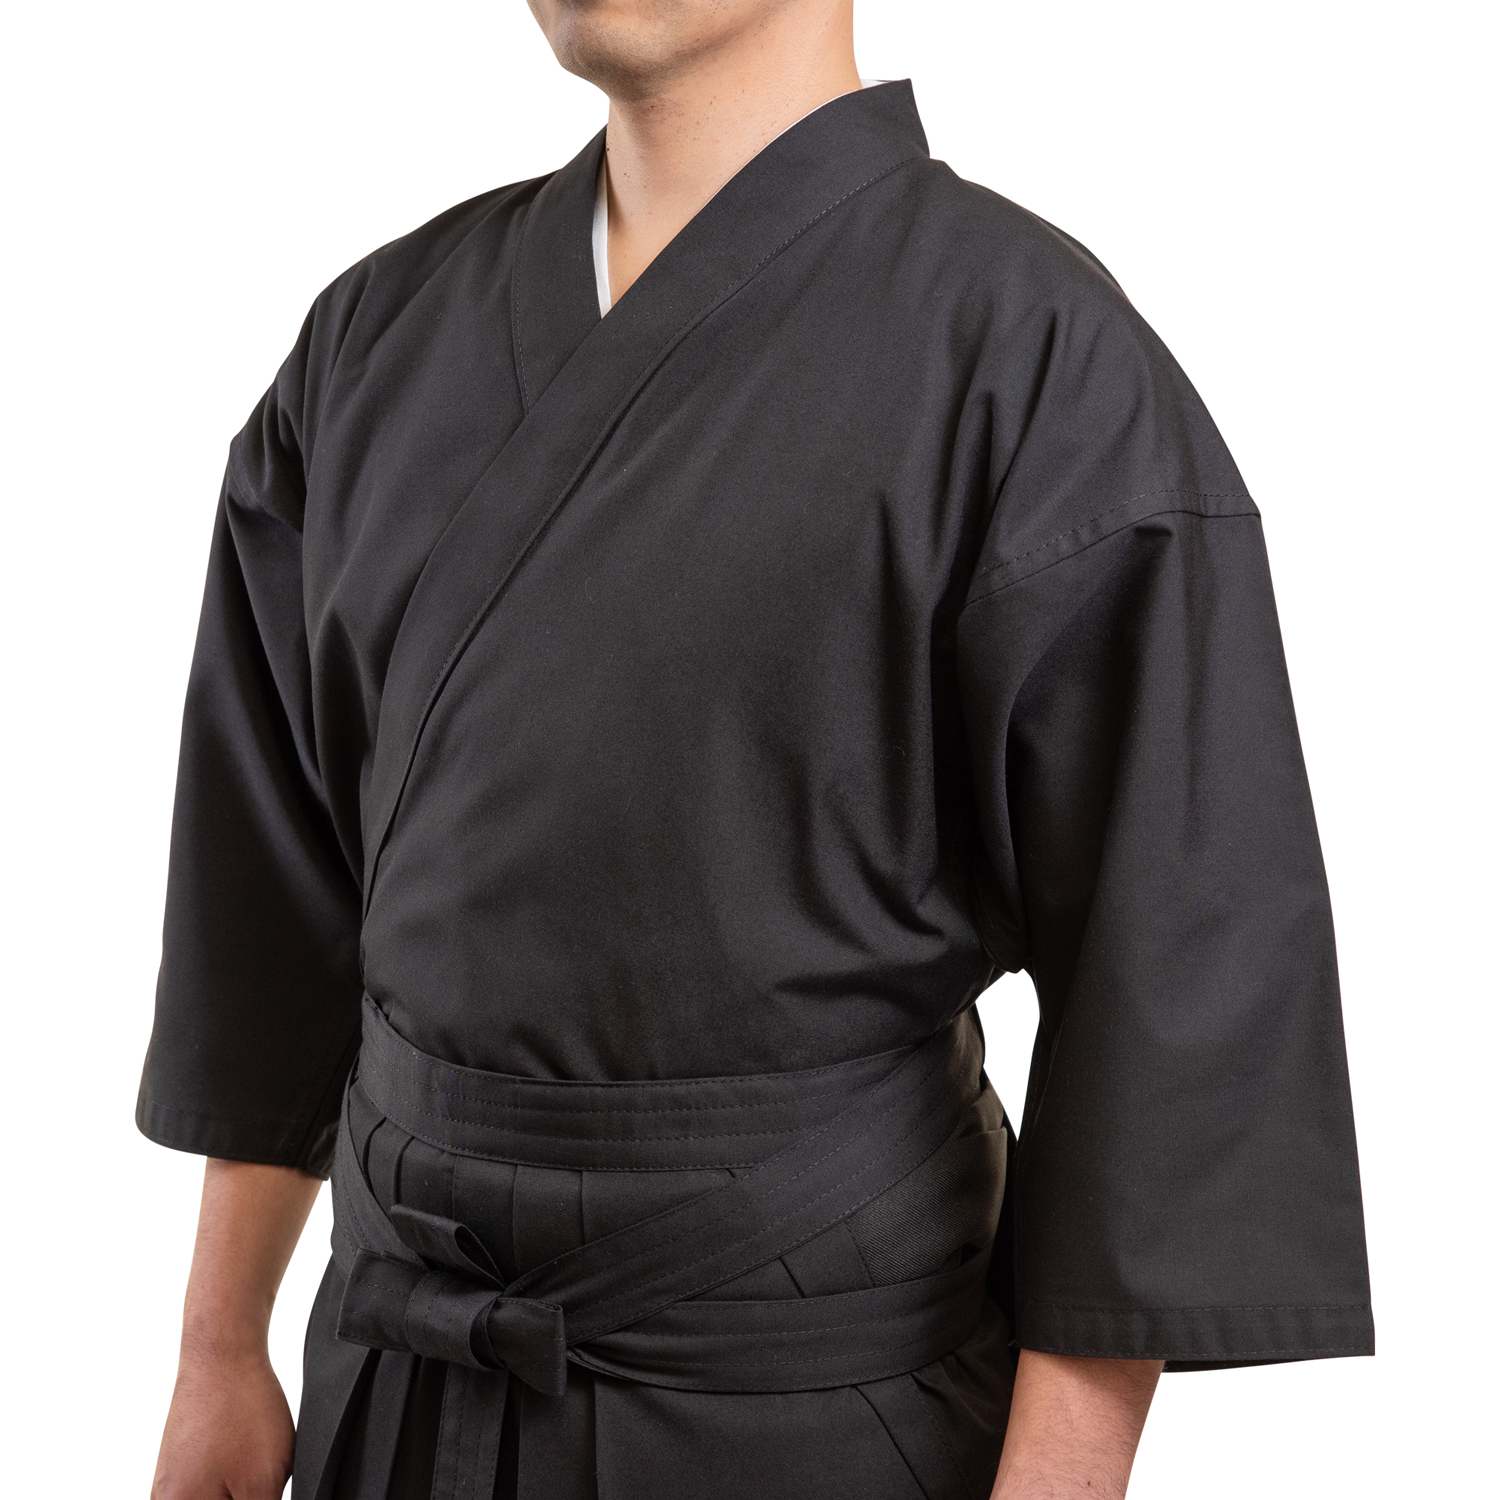 Miyabi Black Iaido Uniform Set with Tetron Iaigi, Shitagi and Hakama